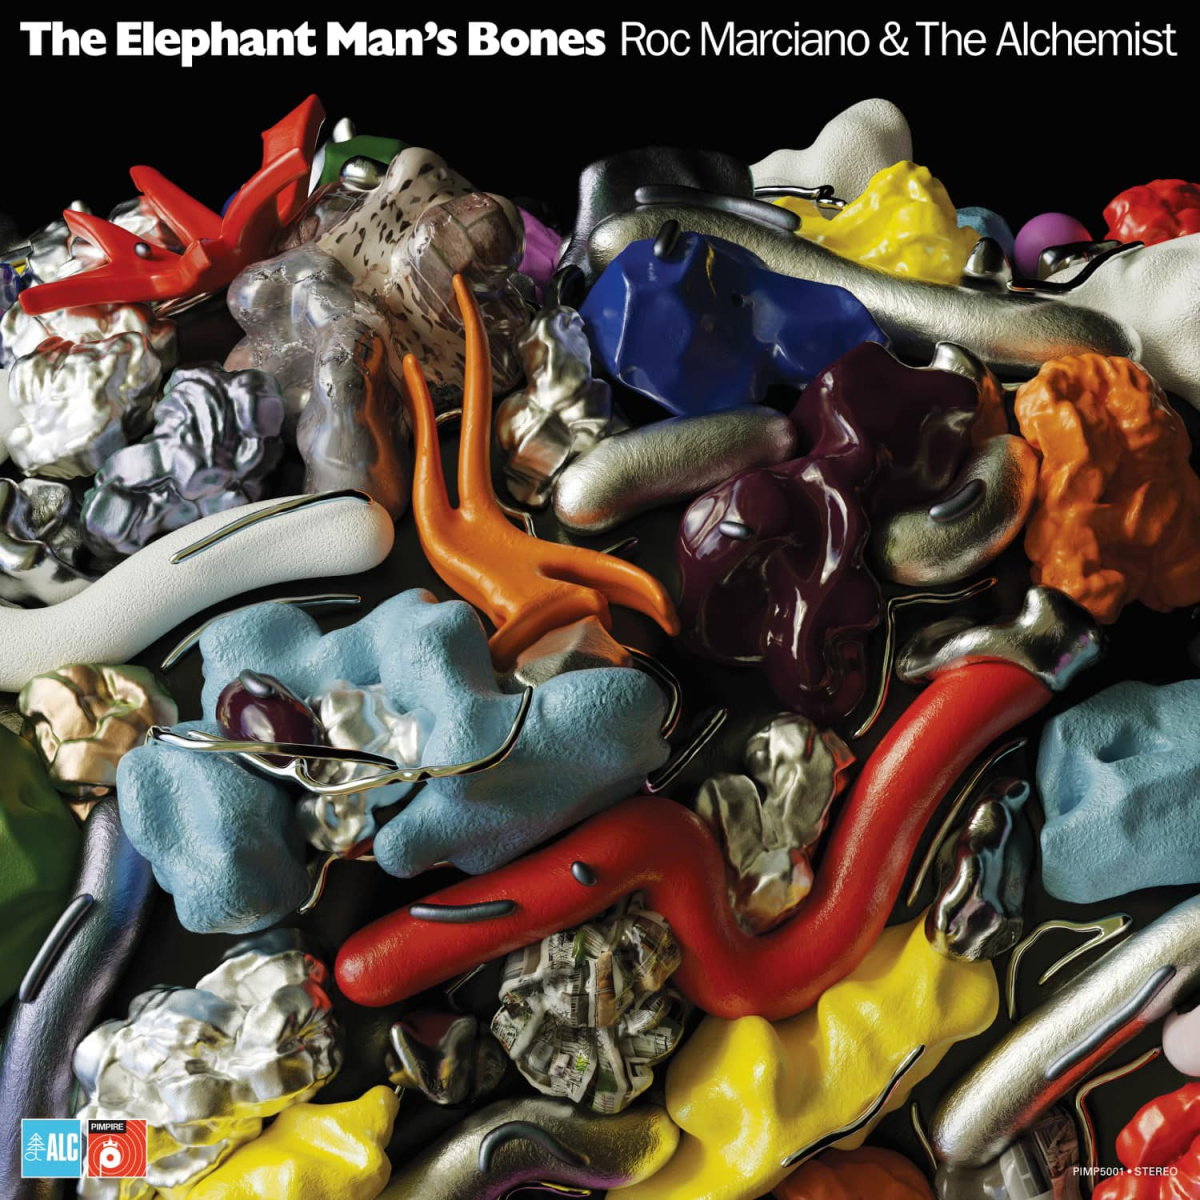 Roc Marciano &amp; The Alchemist &#x27;The Elephant Man&#x27;s Bones&#x27; cover